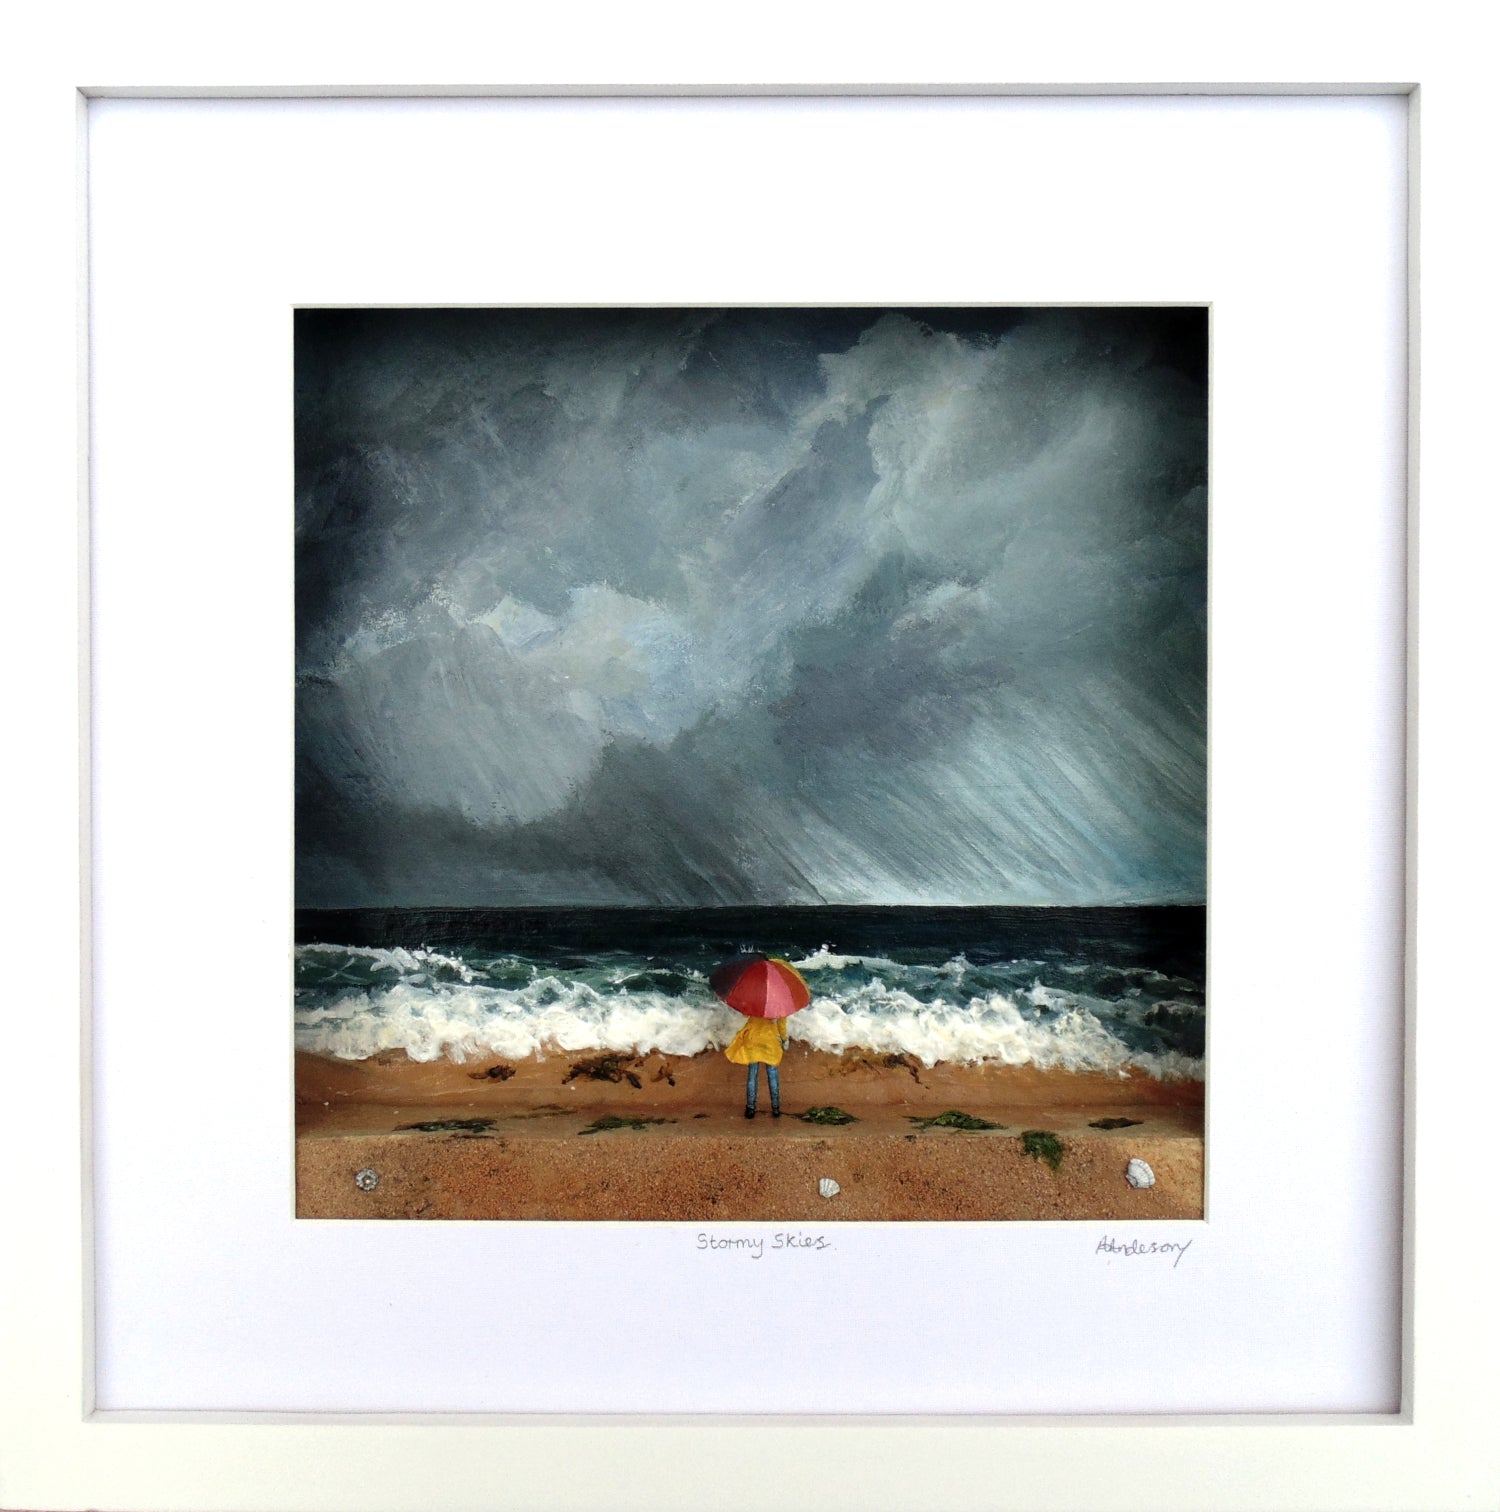 Stormy Skies  - Anna Anderson - Framed size 33cm x 33cm